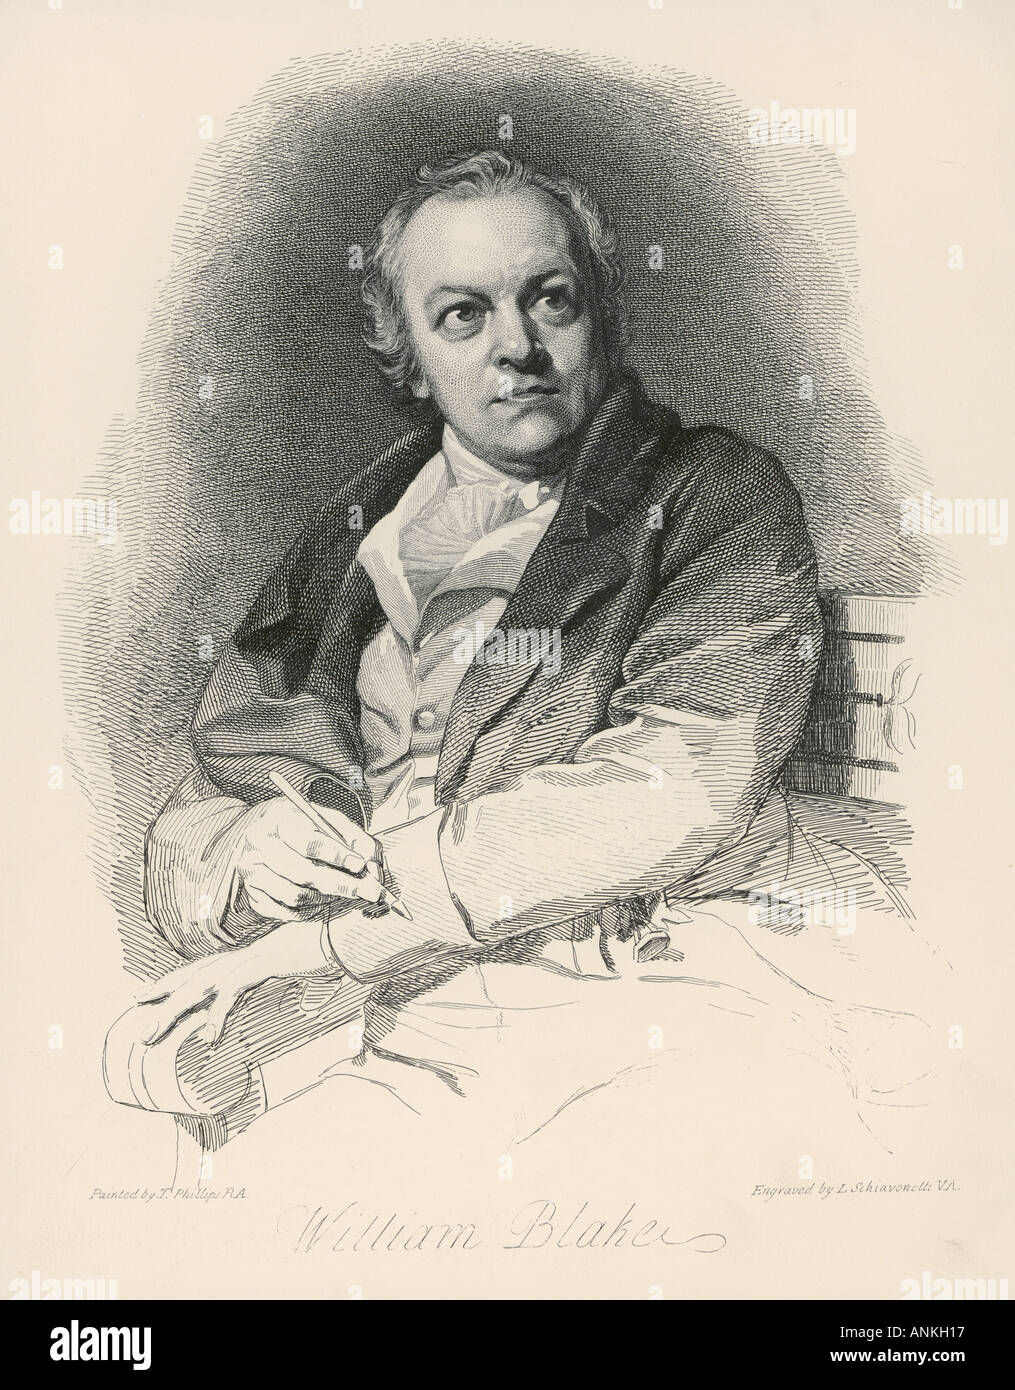 William Blake Engraving Stock Photo